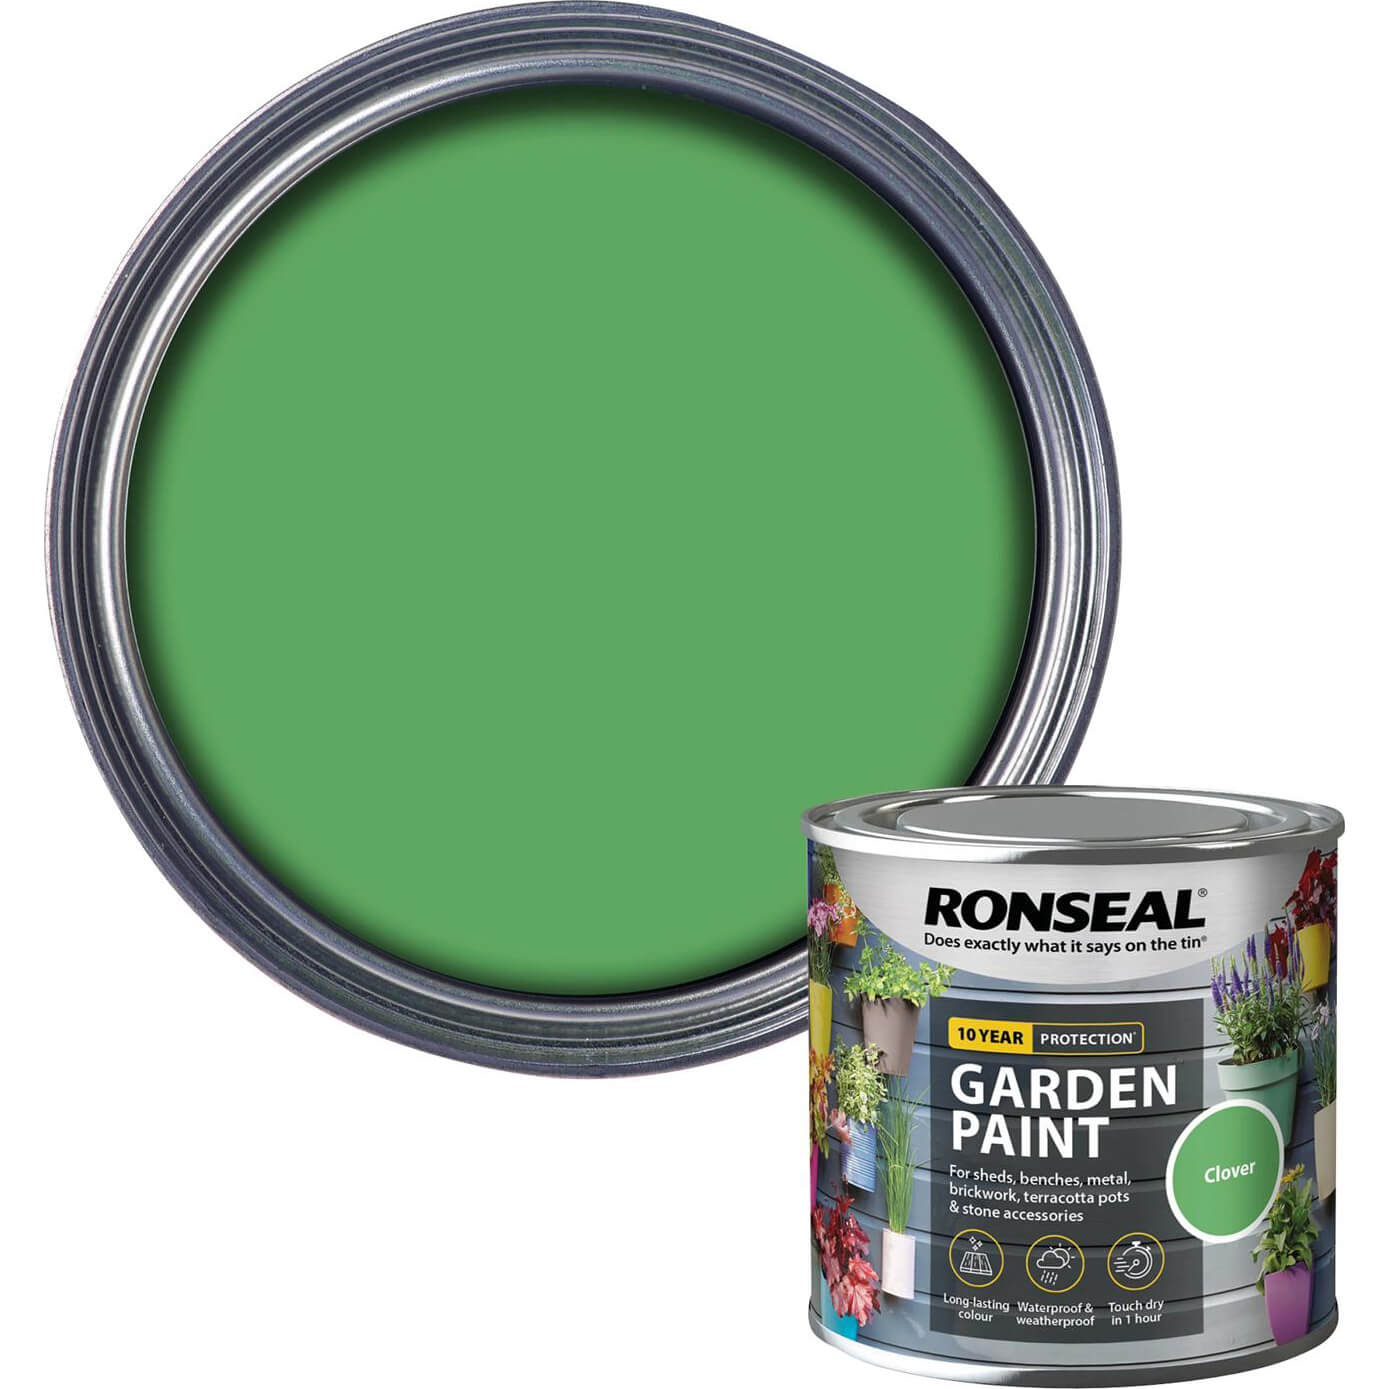 Image of Ronseal General Purpose Garden Paint Clover 250ml